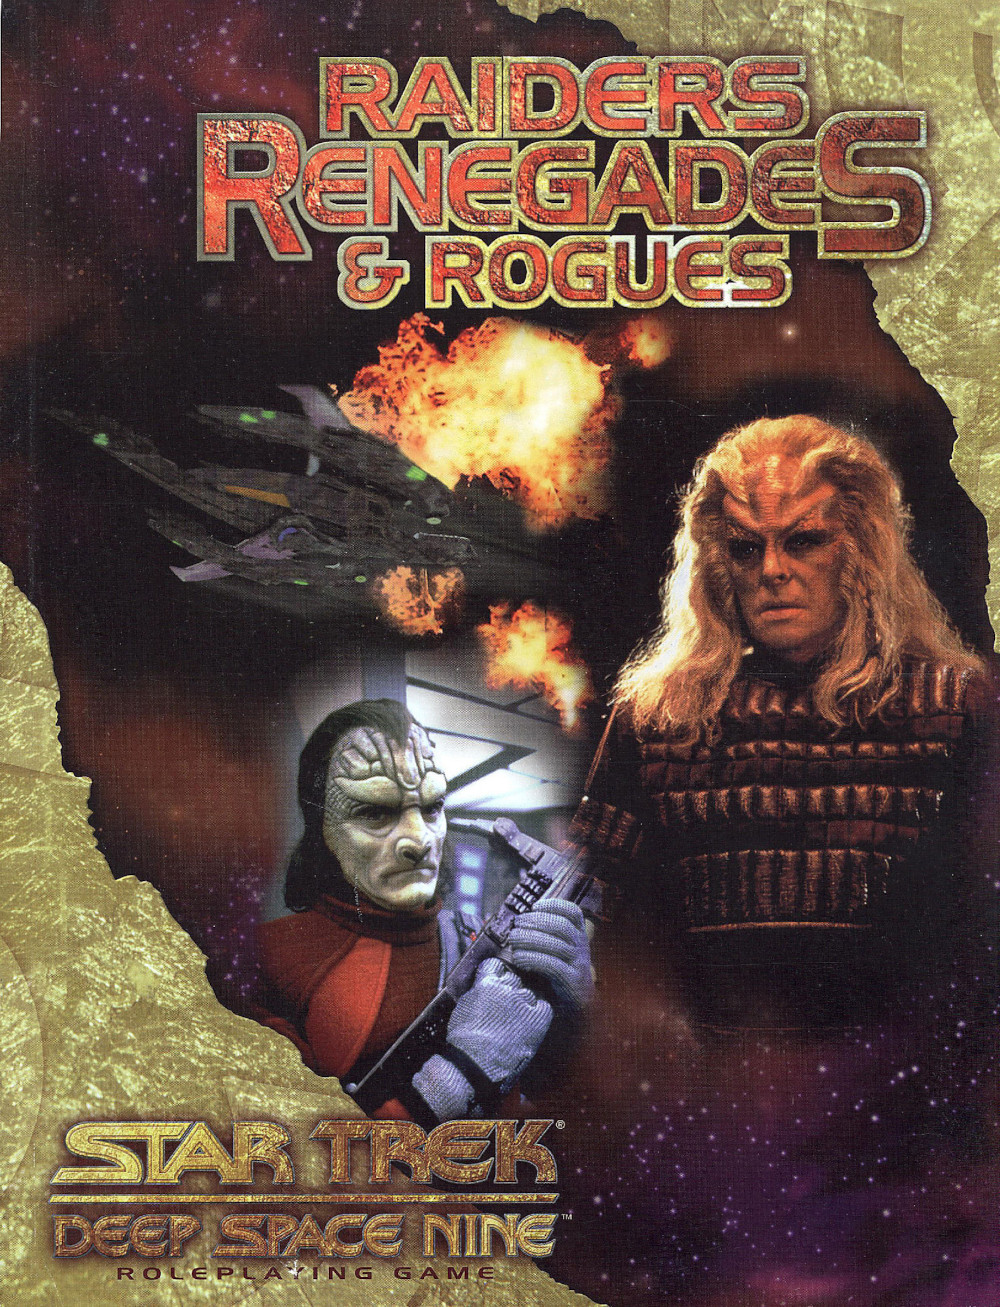 Raiders, Renegades & Rogues (Mar 2000)